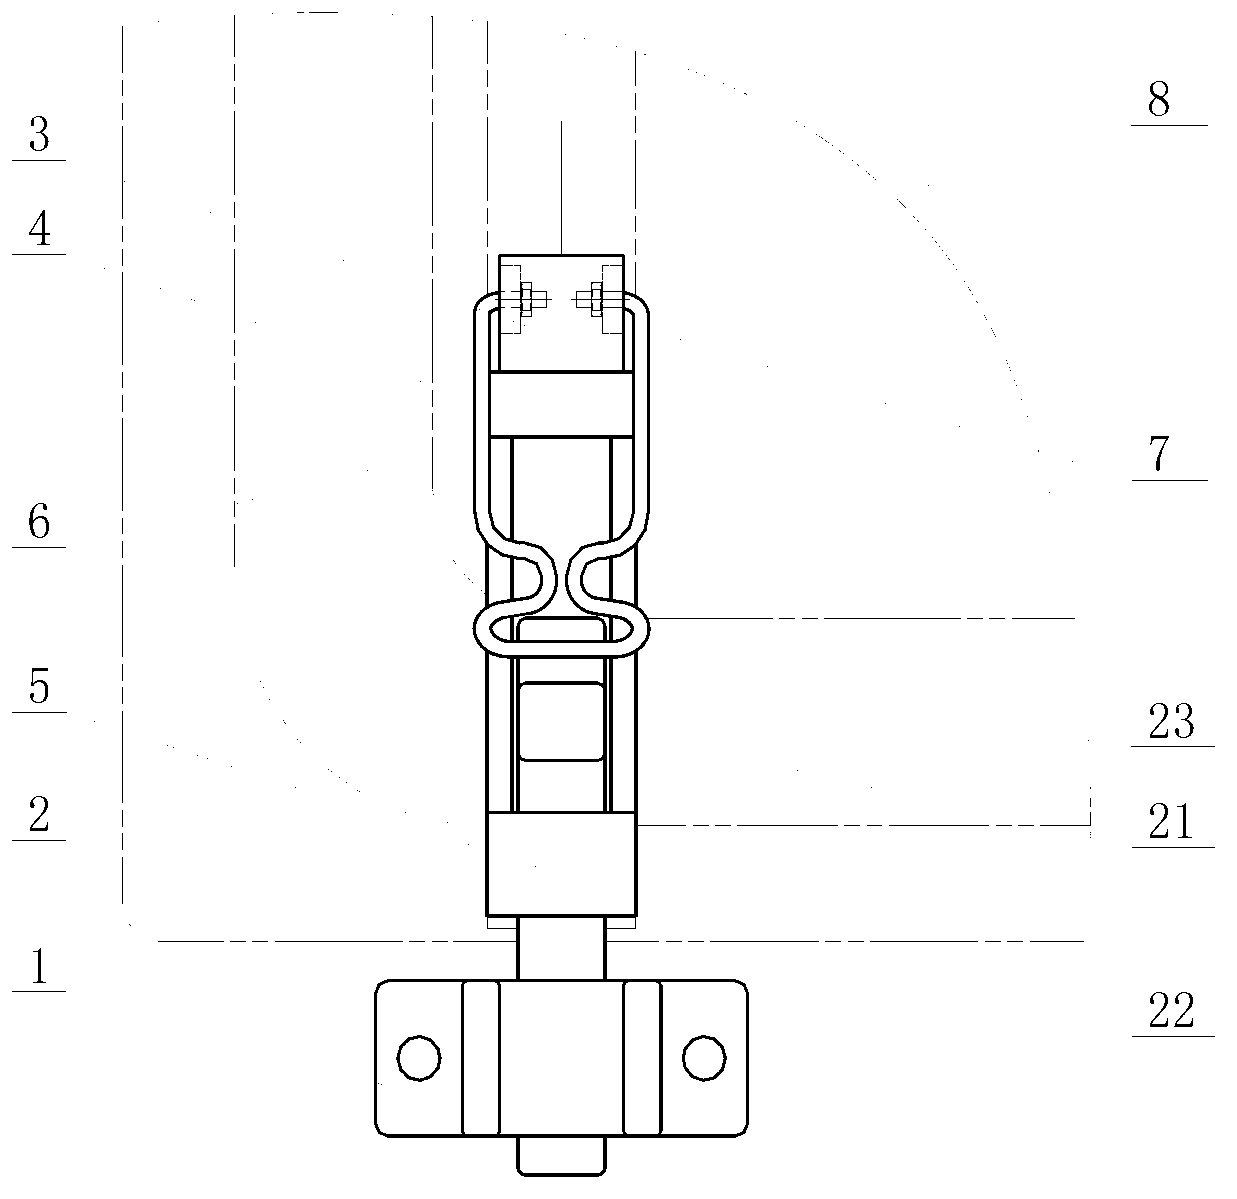 Locking device for bottom side door of railway open wagon